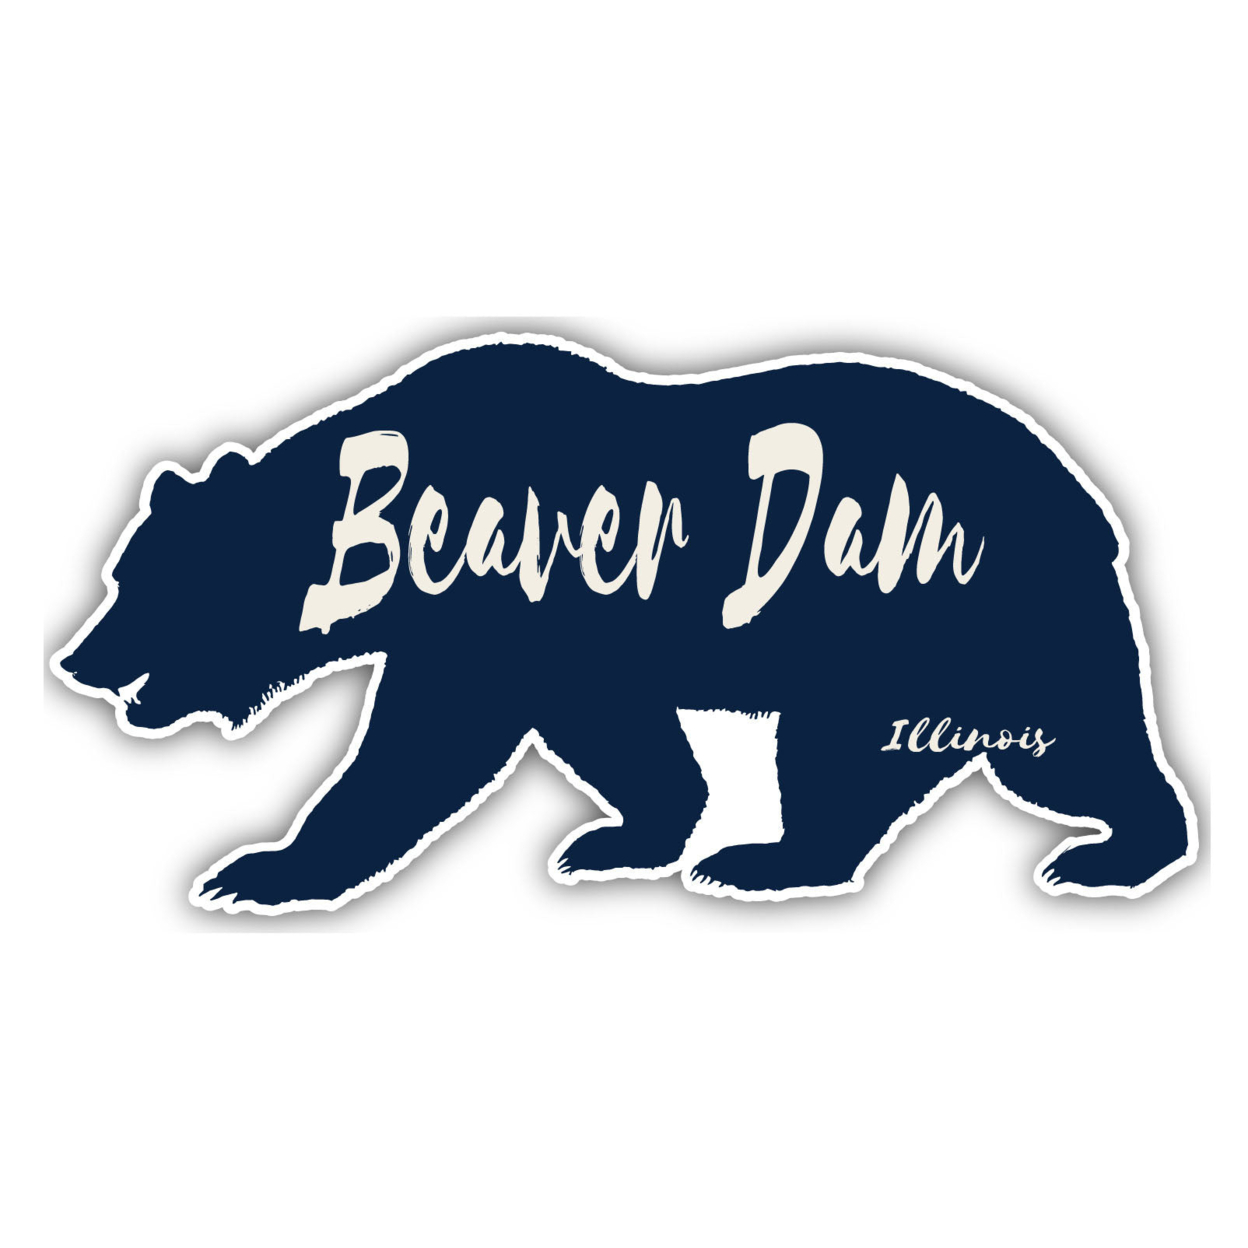 Beaver Dam Illinois Souvenir Decorative Stickers (Choose Theme And Size) - Single Unit, 12-Inch, Bear